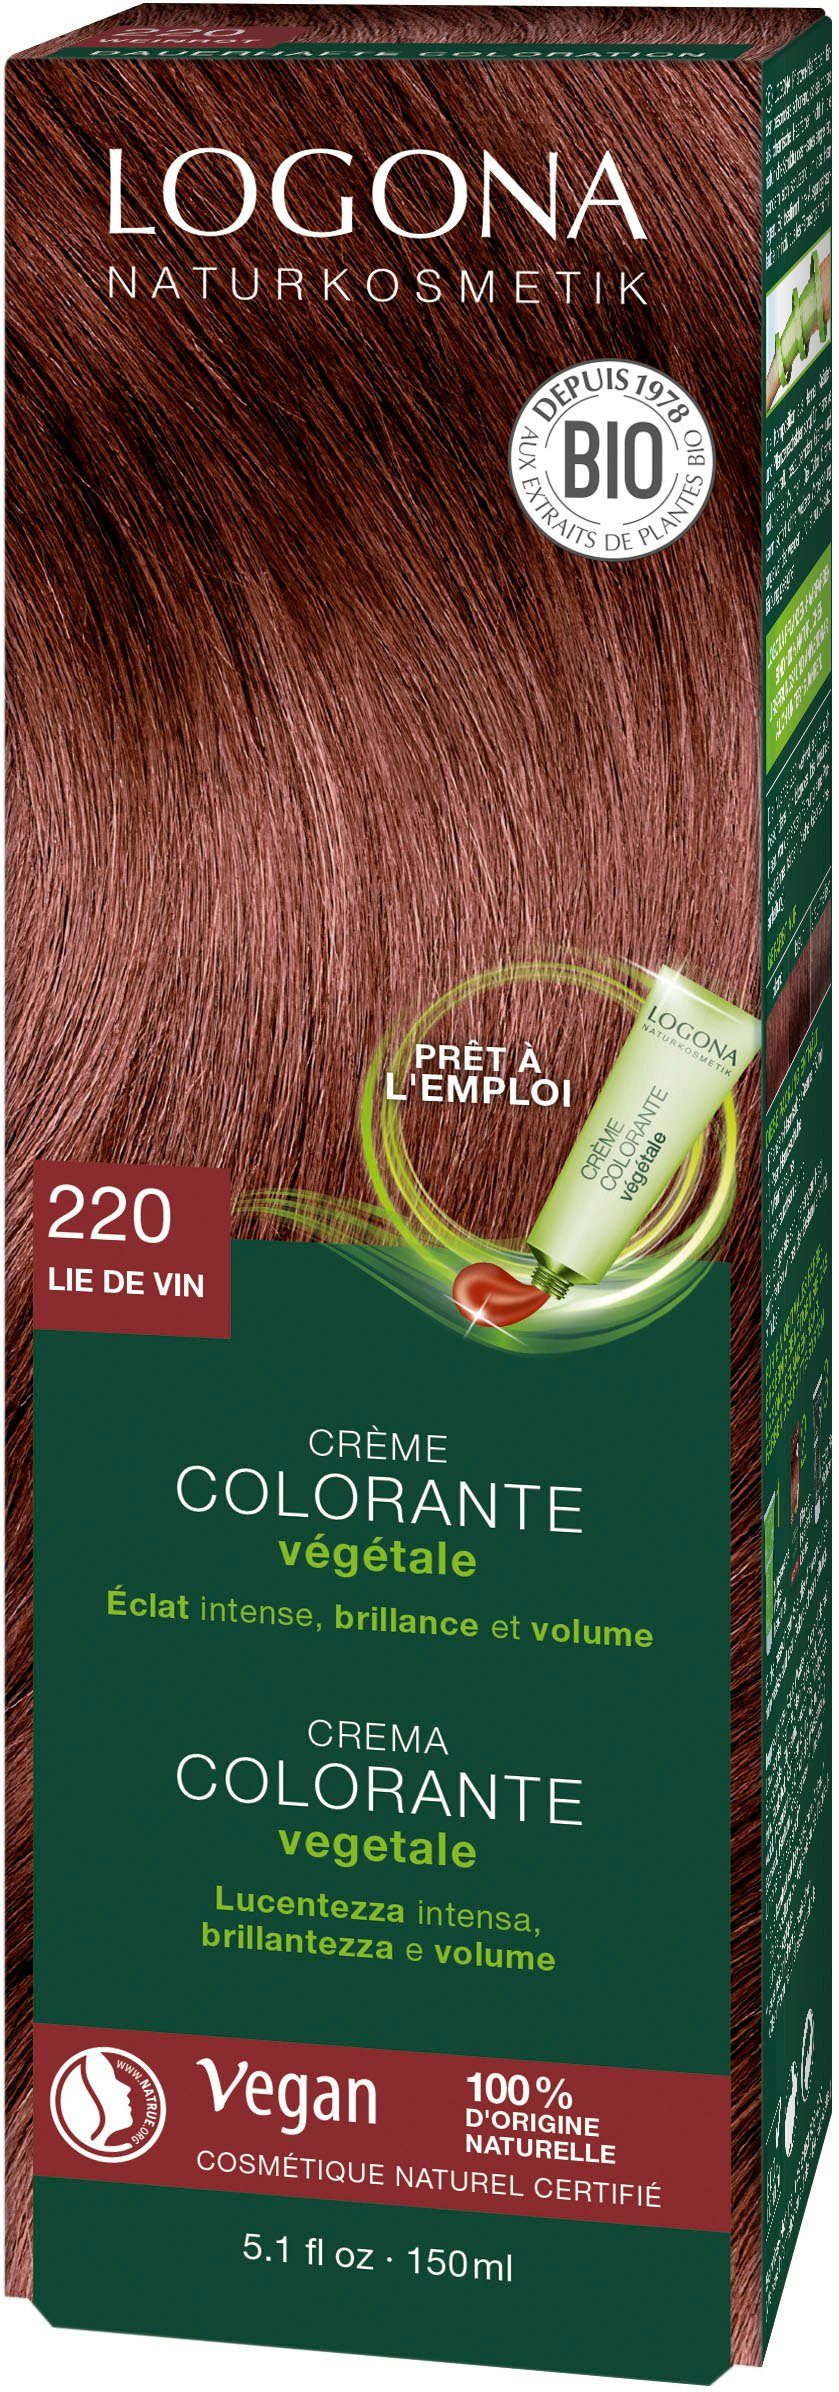 Logona Creme Haarfarbe 220 weinrot LOGONA Pflanzen-Haarfarbe